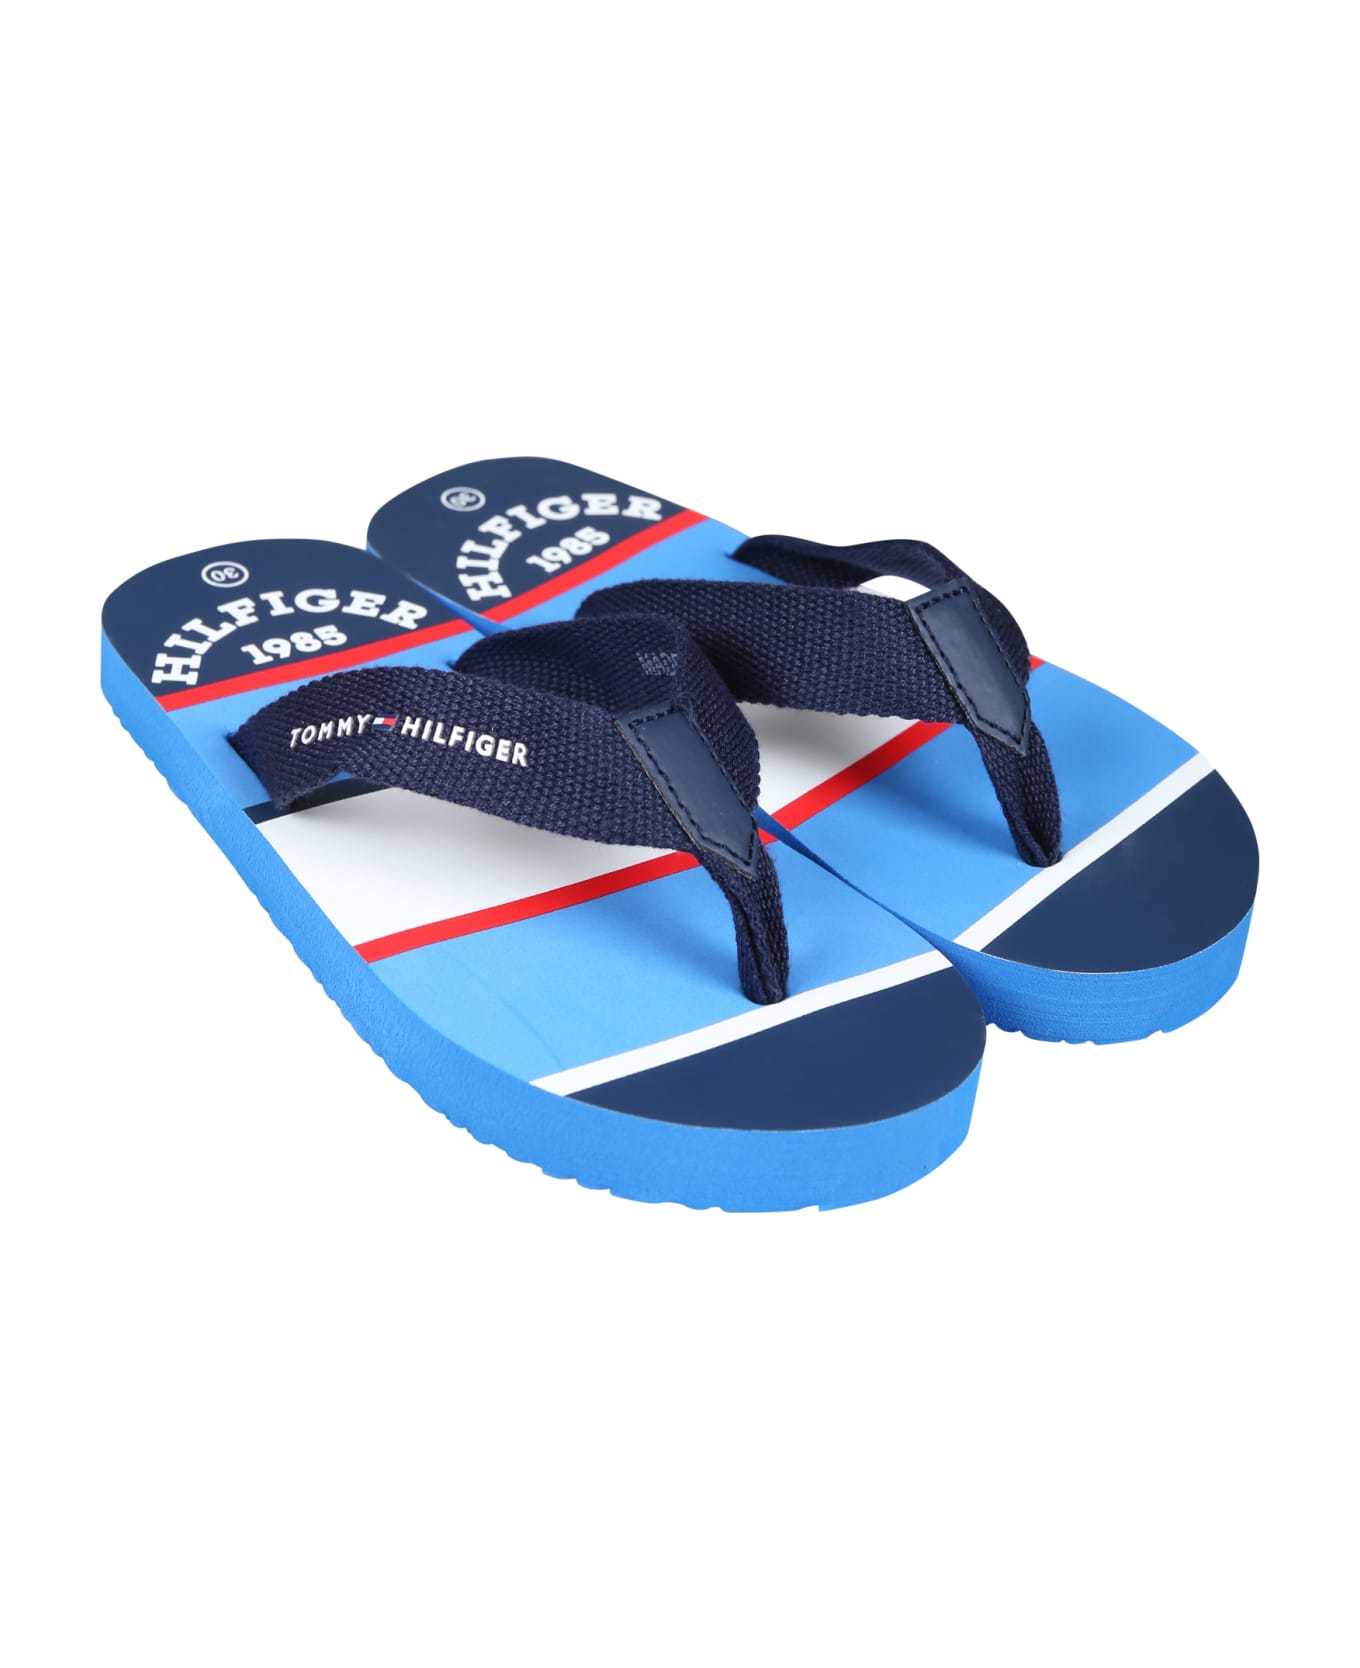 Tommy Hilfiger Blue Flip Flops For Girl With Logo And Flag - Blue